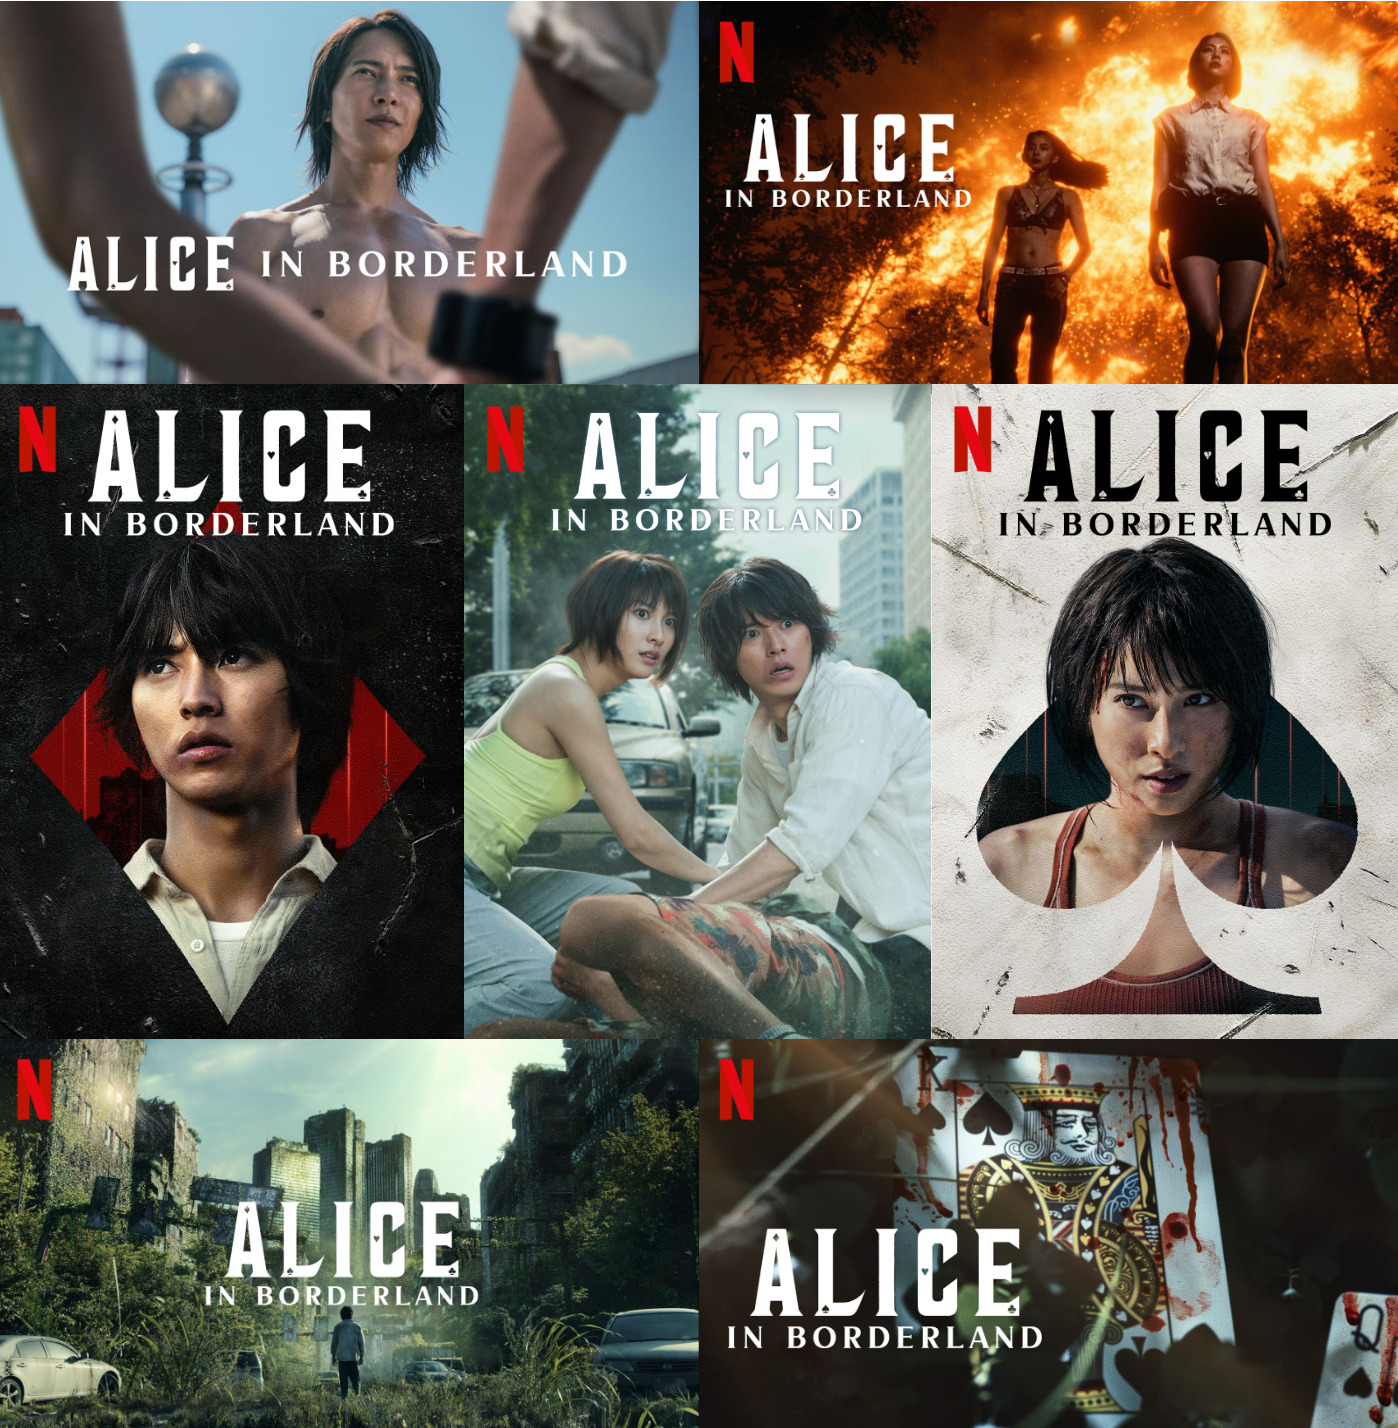 Netflixシリーズ『今際の国のアリス』シーズン2はNetflixにて全世界独占配信中